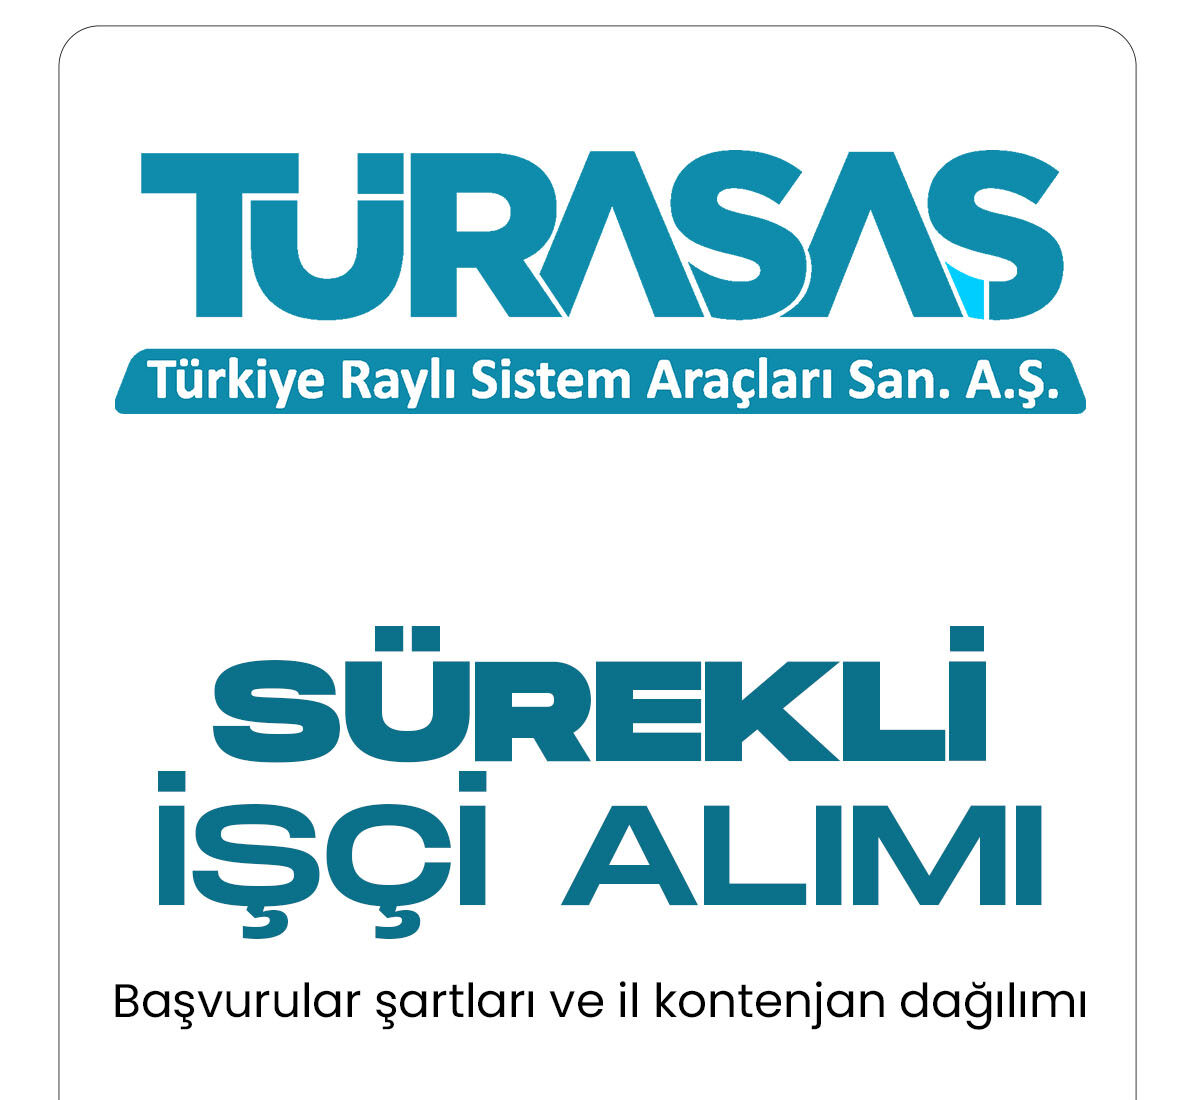 TÜRASAŞ Genel Müdürlüğü işçi alımı duyurusu yayımlandı.